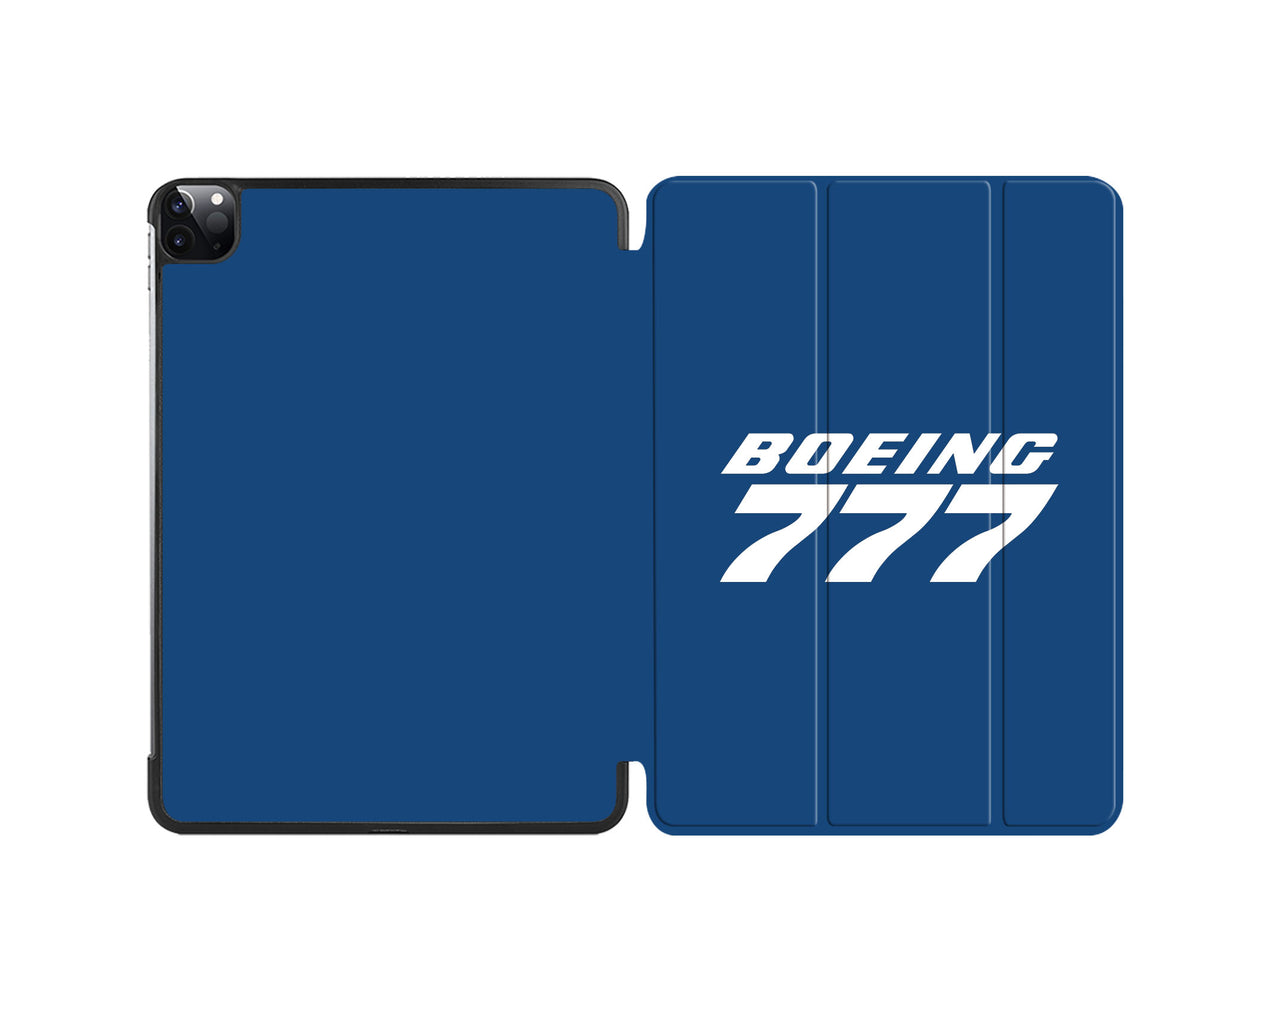 Boeing 777 & Text Designed iPad Cases